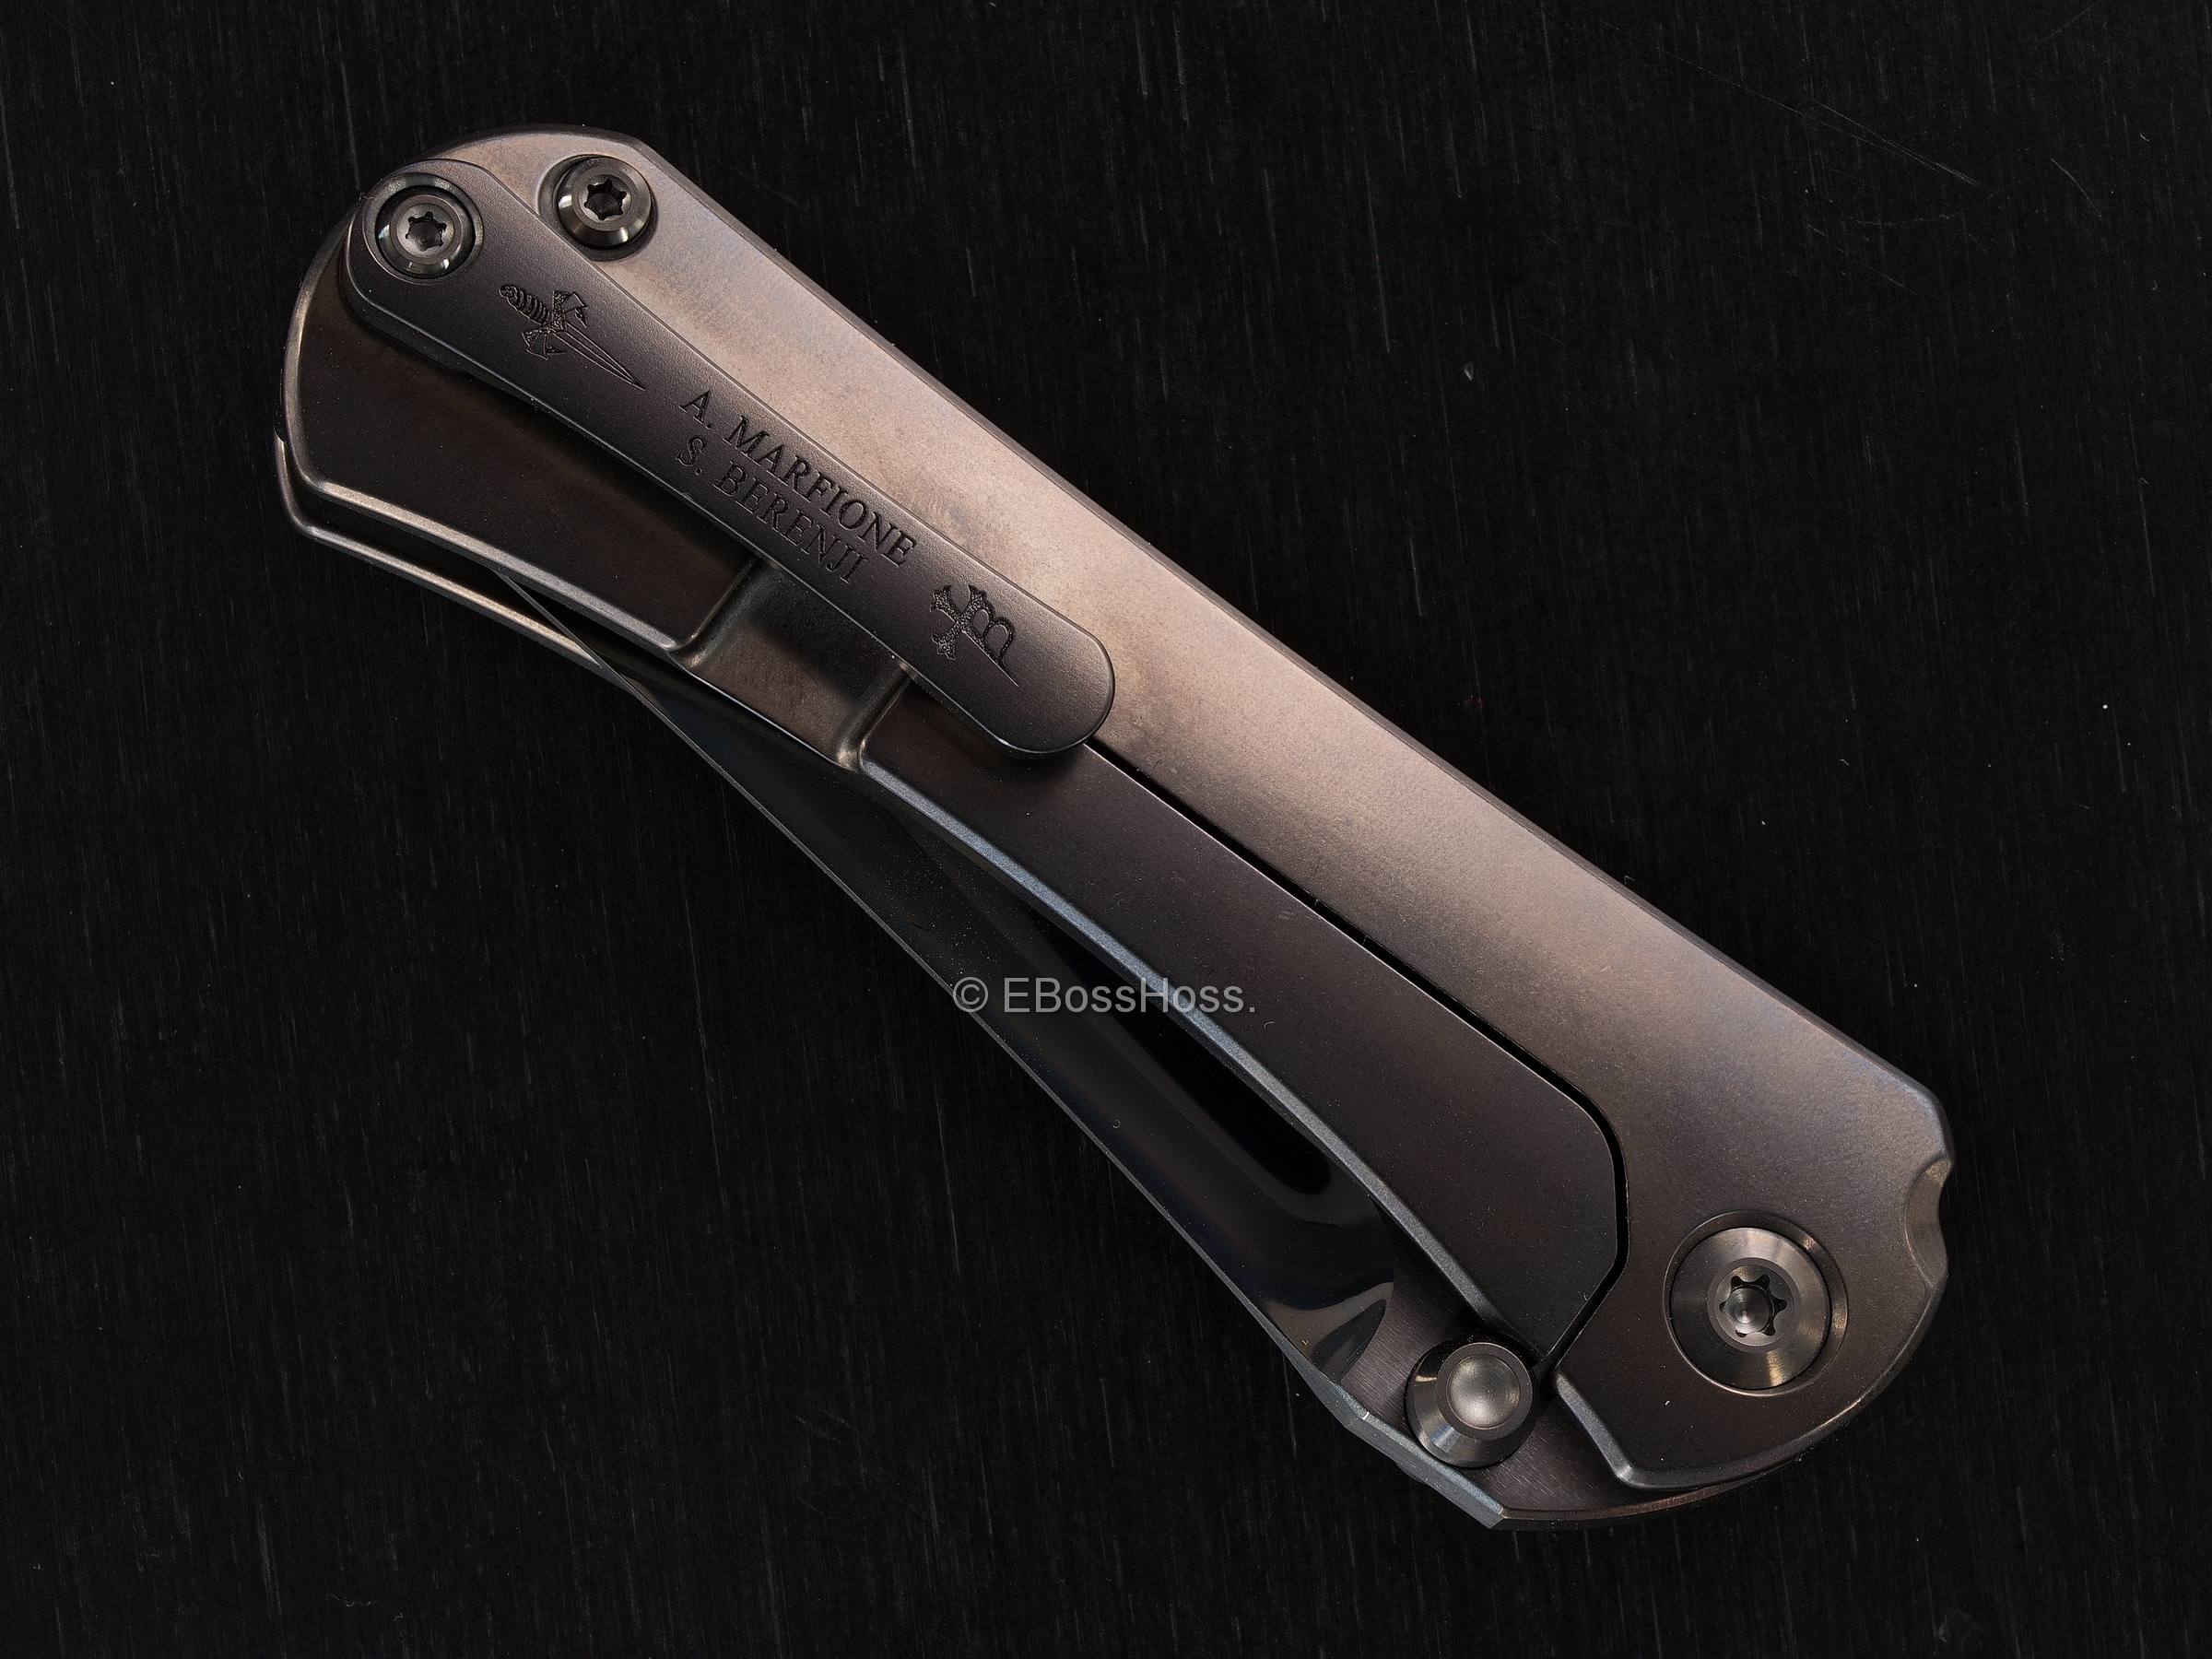 Marfione Custom Knives / Borka Blades Black Diamond SBKF Collaboration